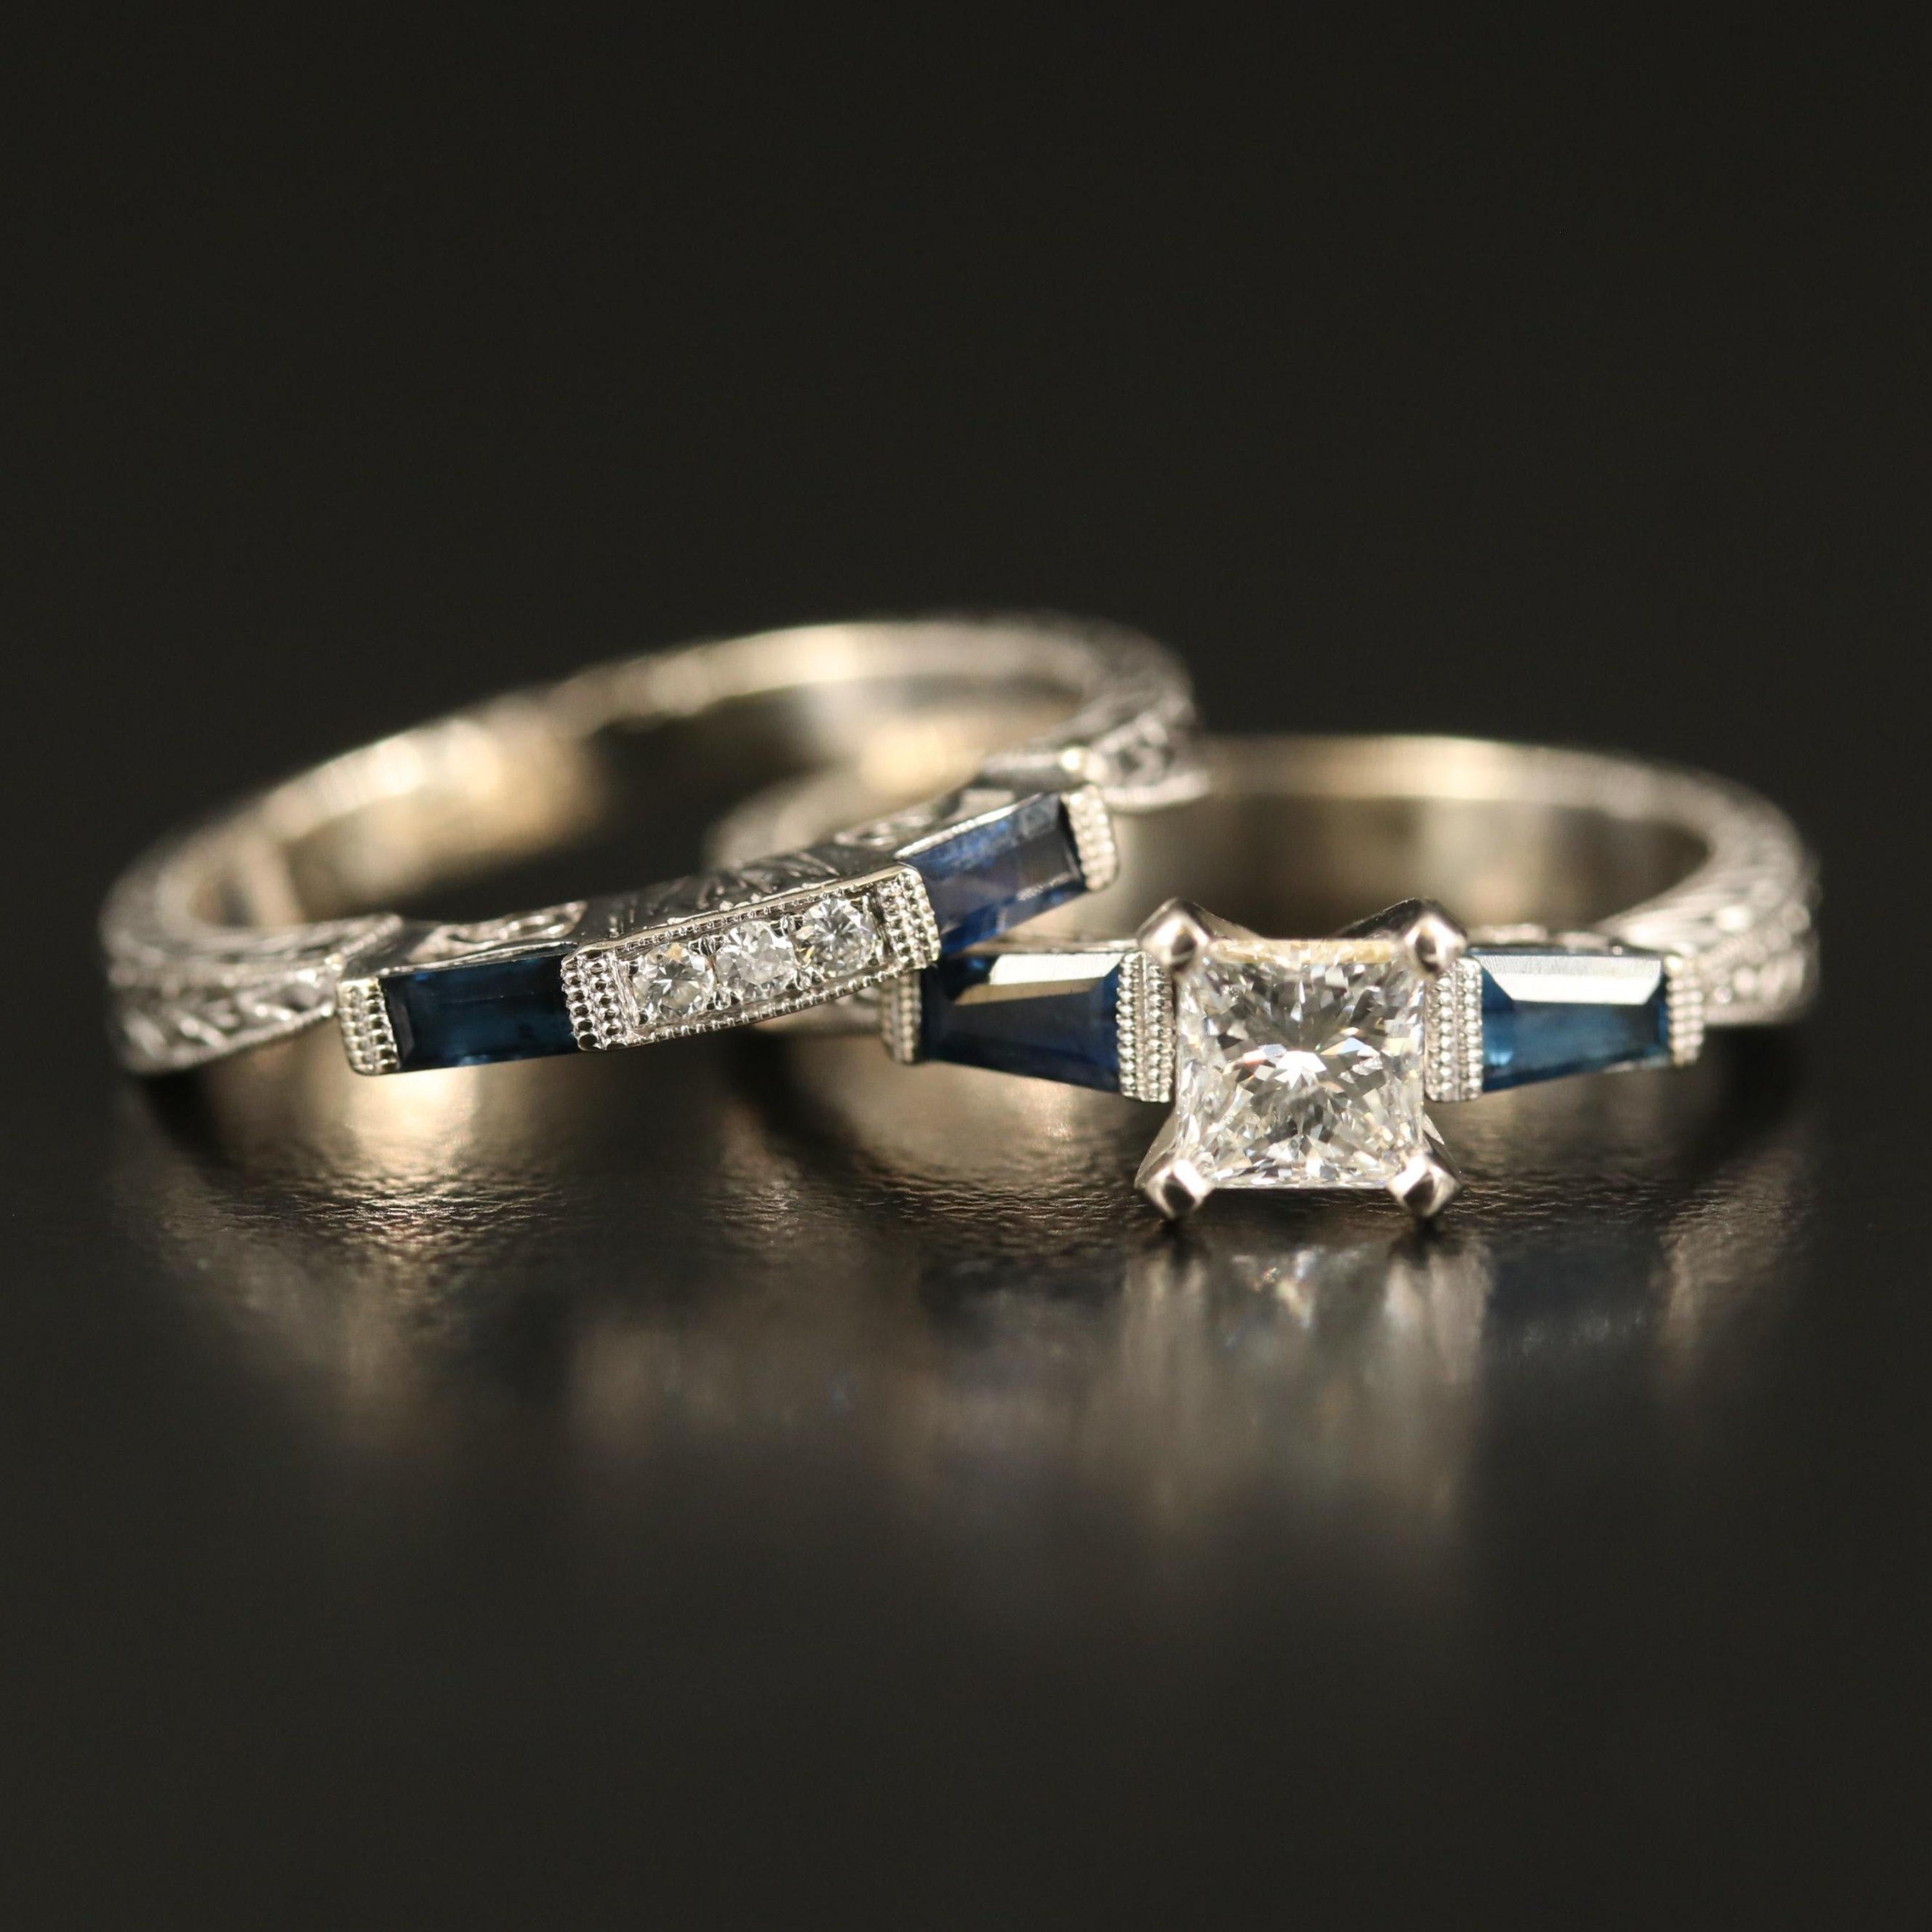 For Sale:  Vintage 1.23 Carat Princess Cut Diamond Sapphire Bridal Ring Set in 18K Gold 4